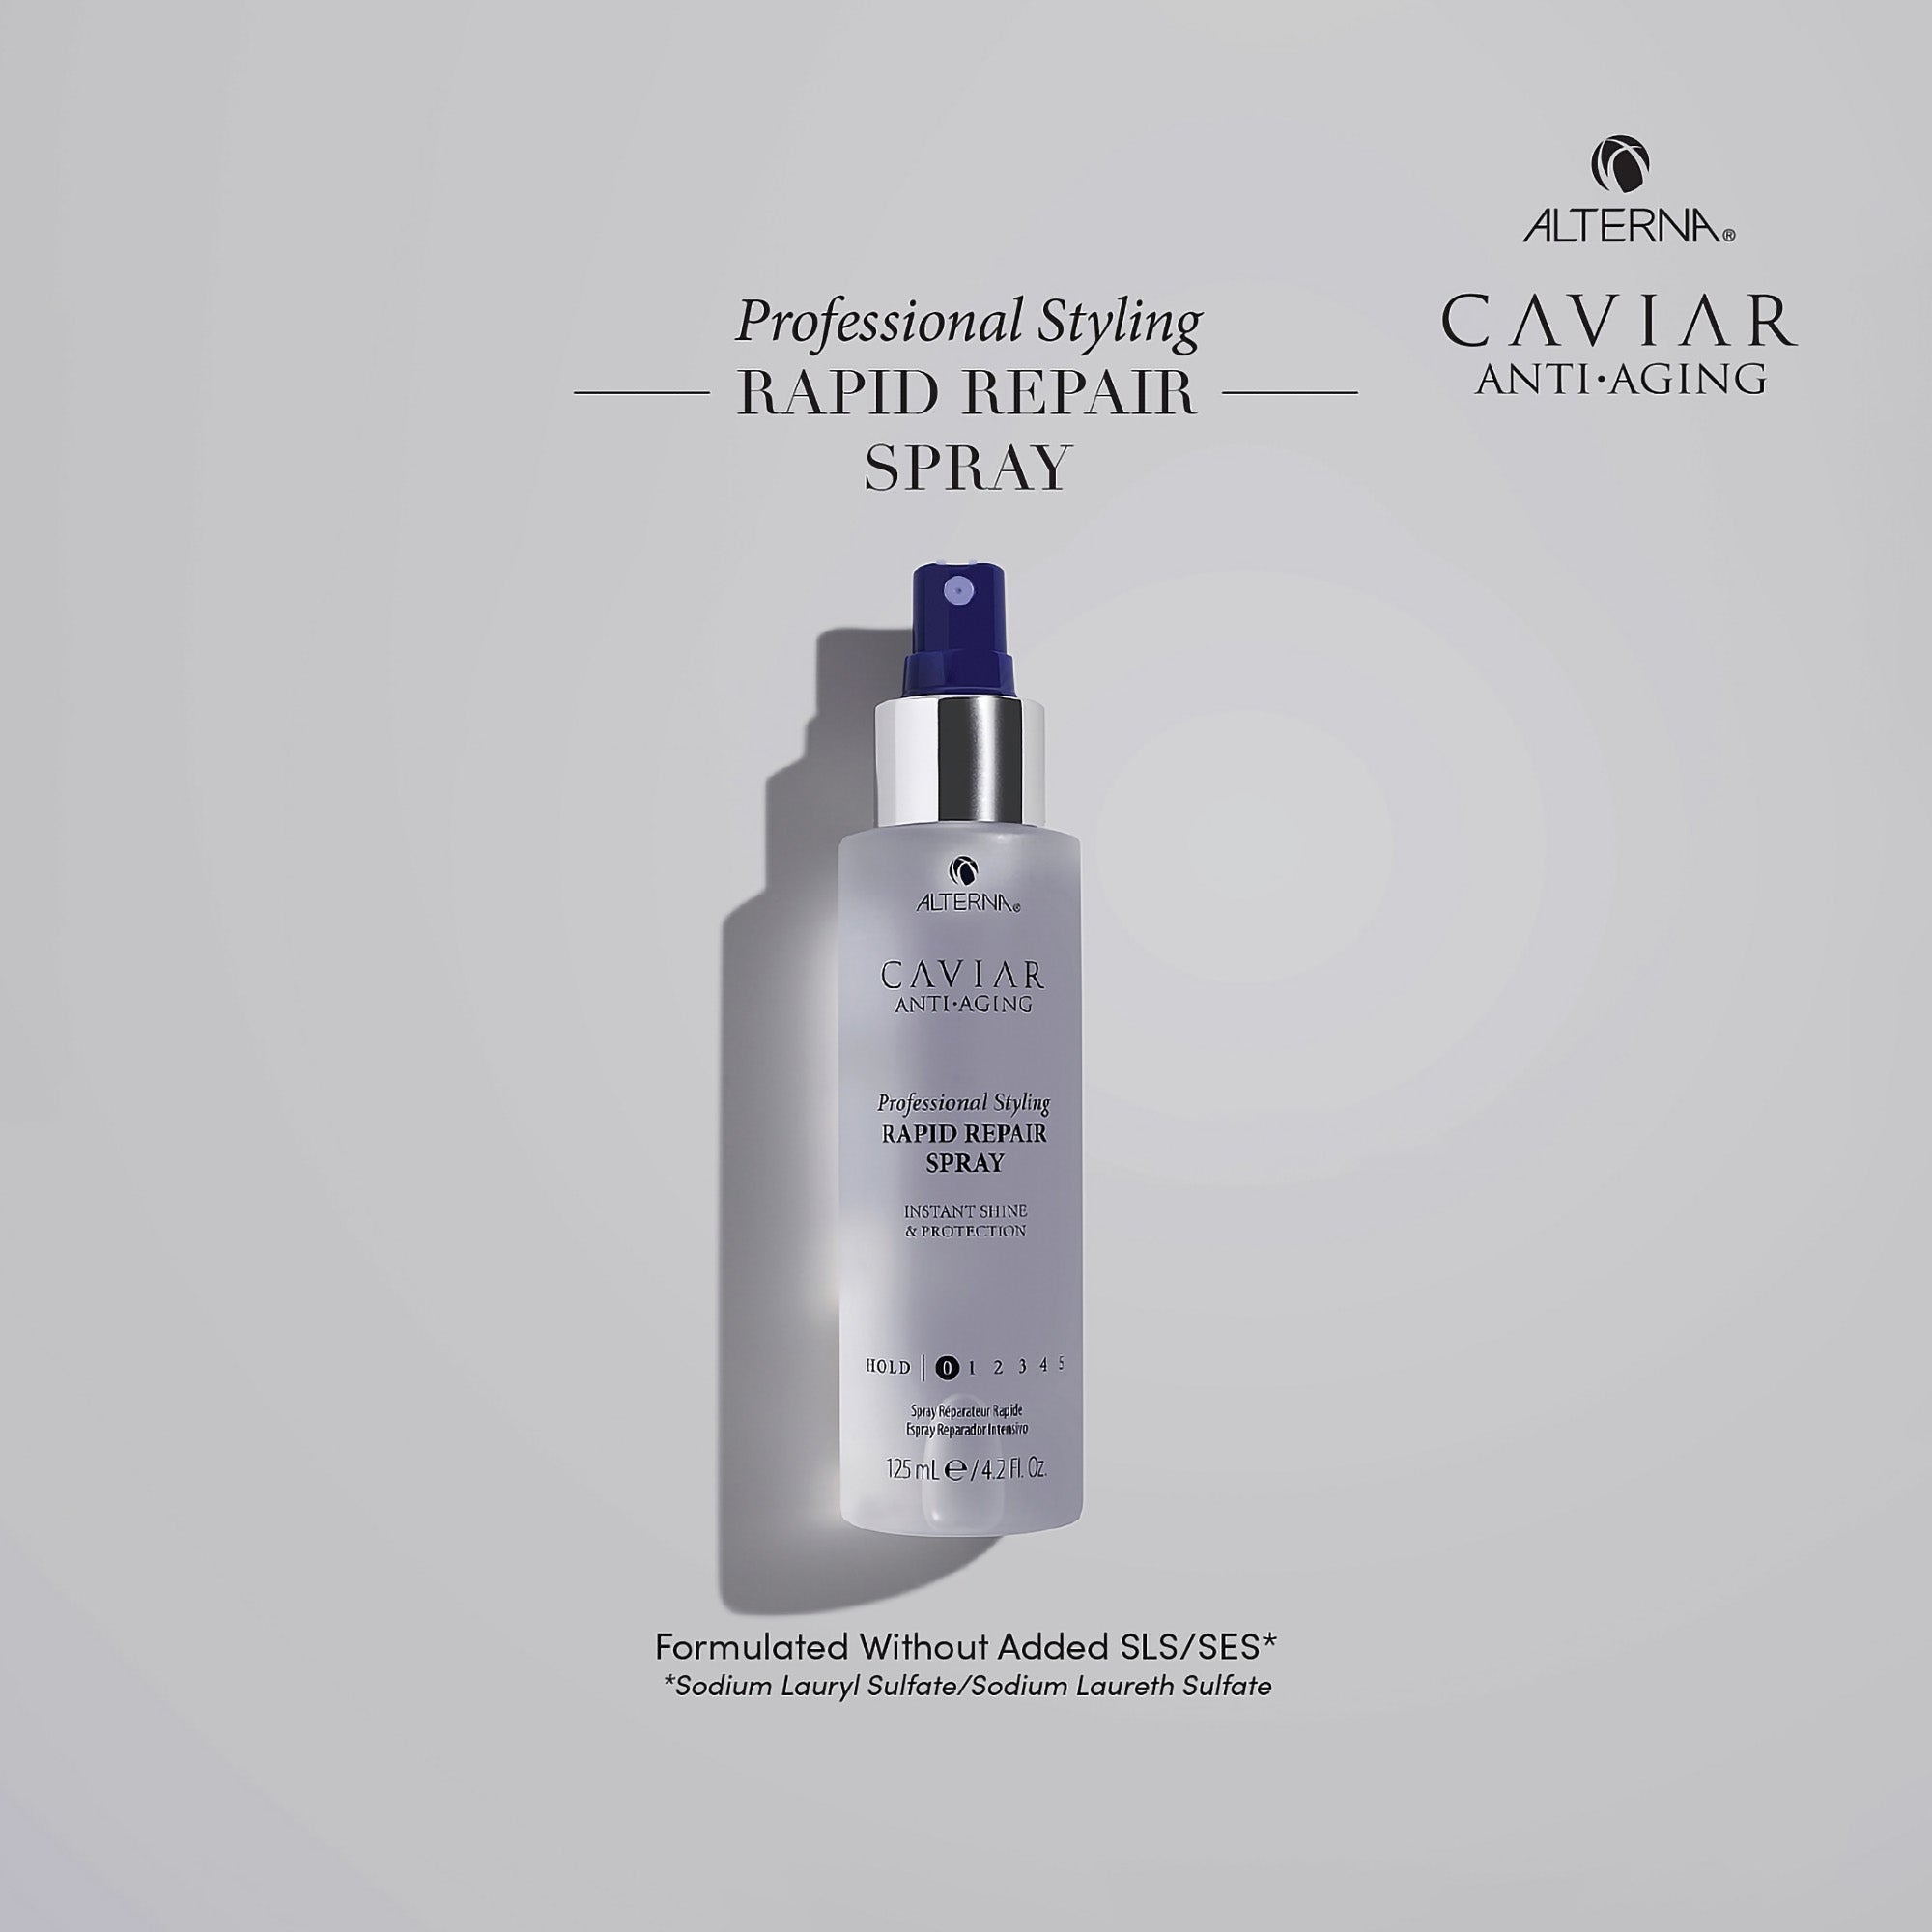 Alterna Caviar Anti-Aging Rapid Repair Spray - 4oz / 4 OZ